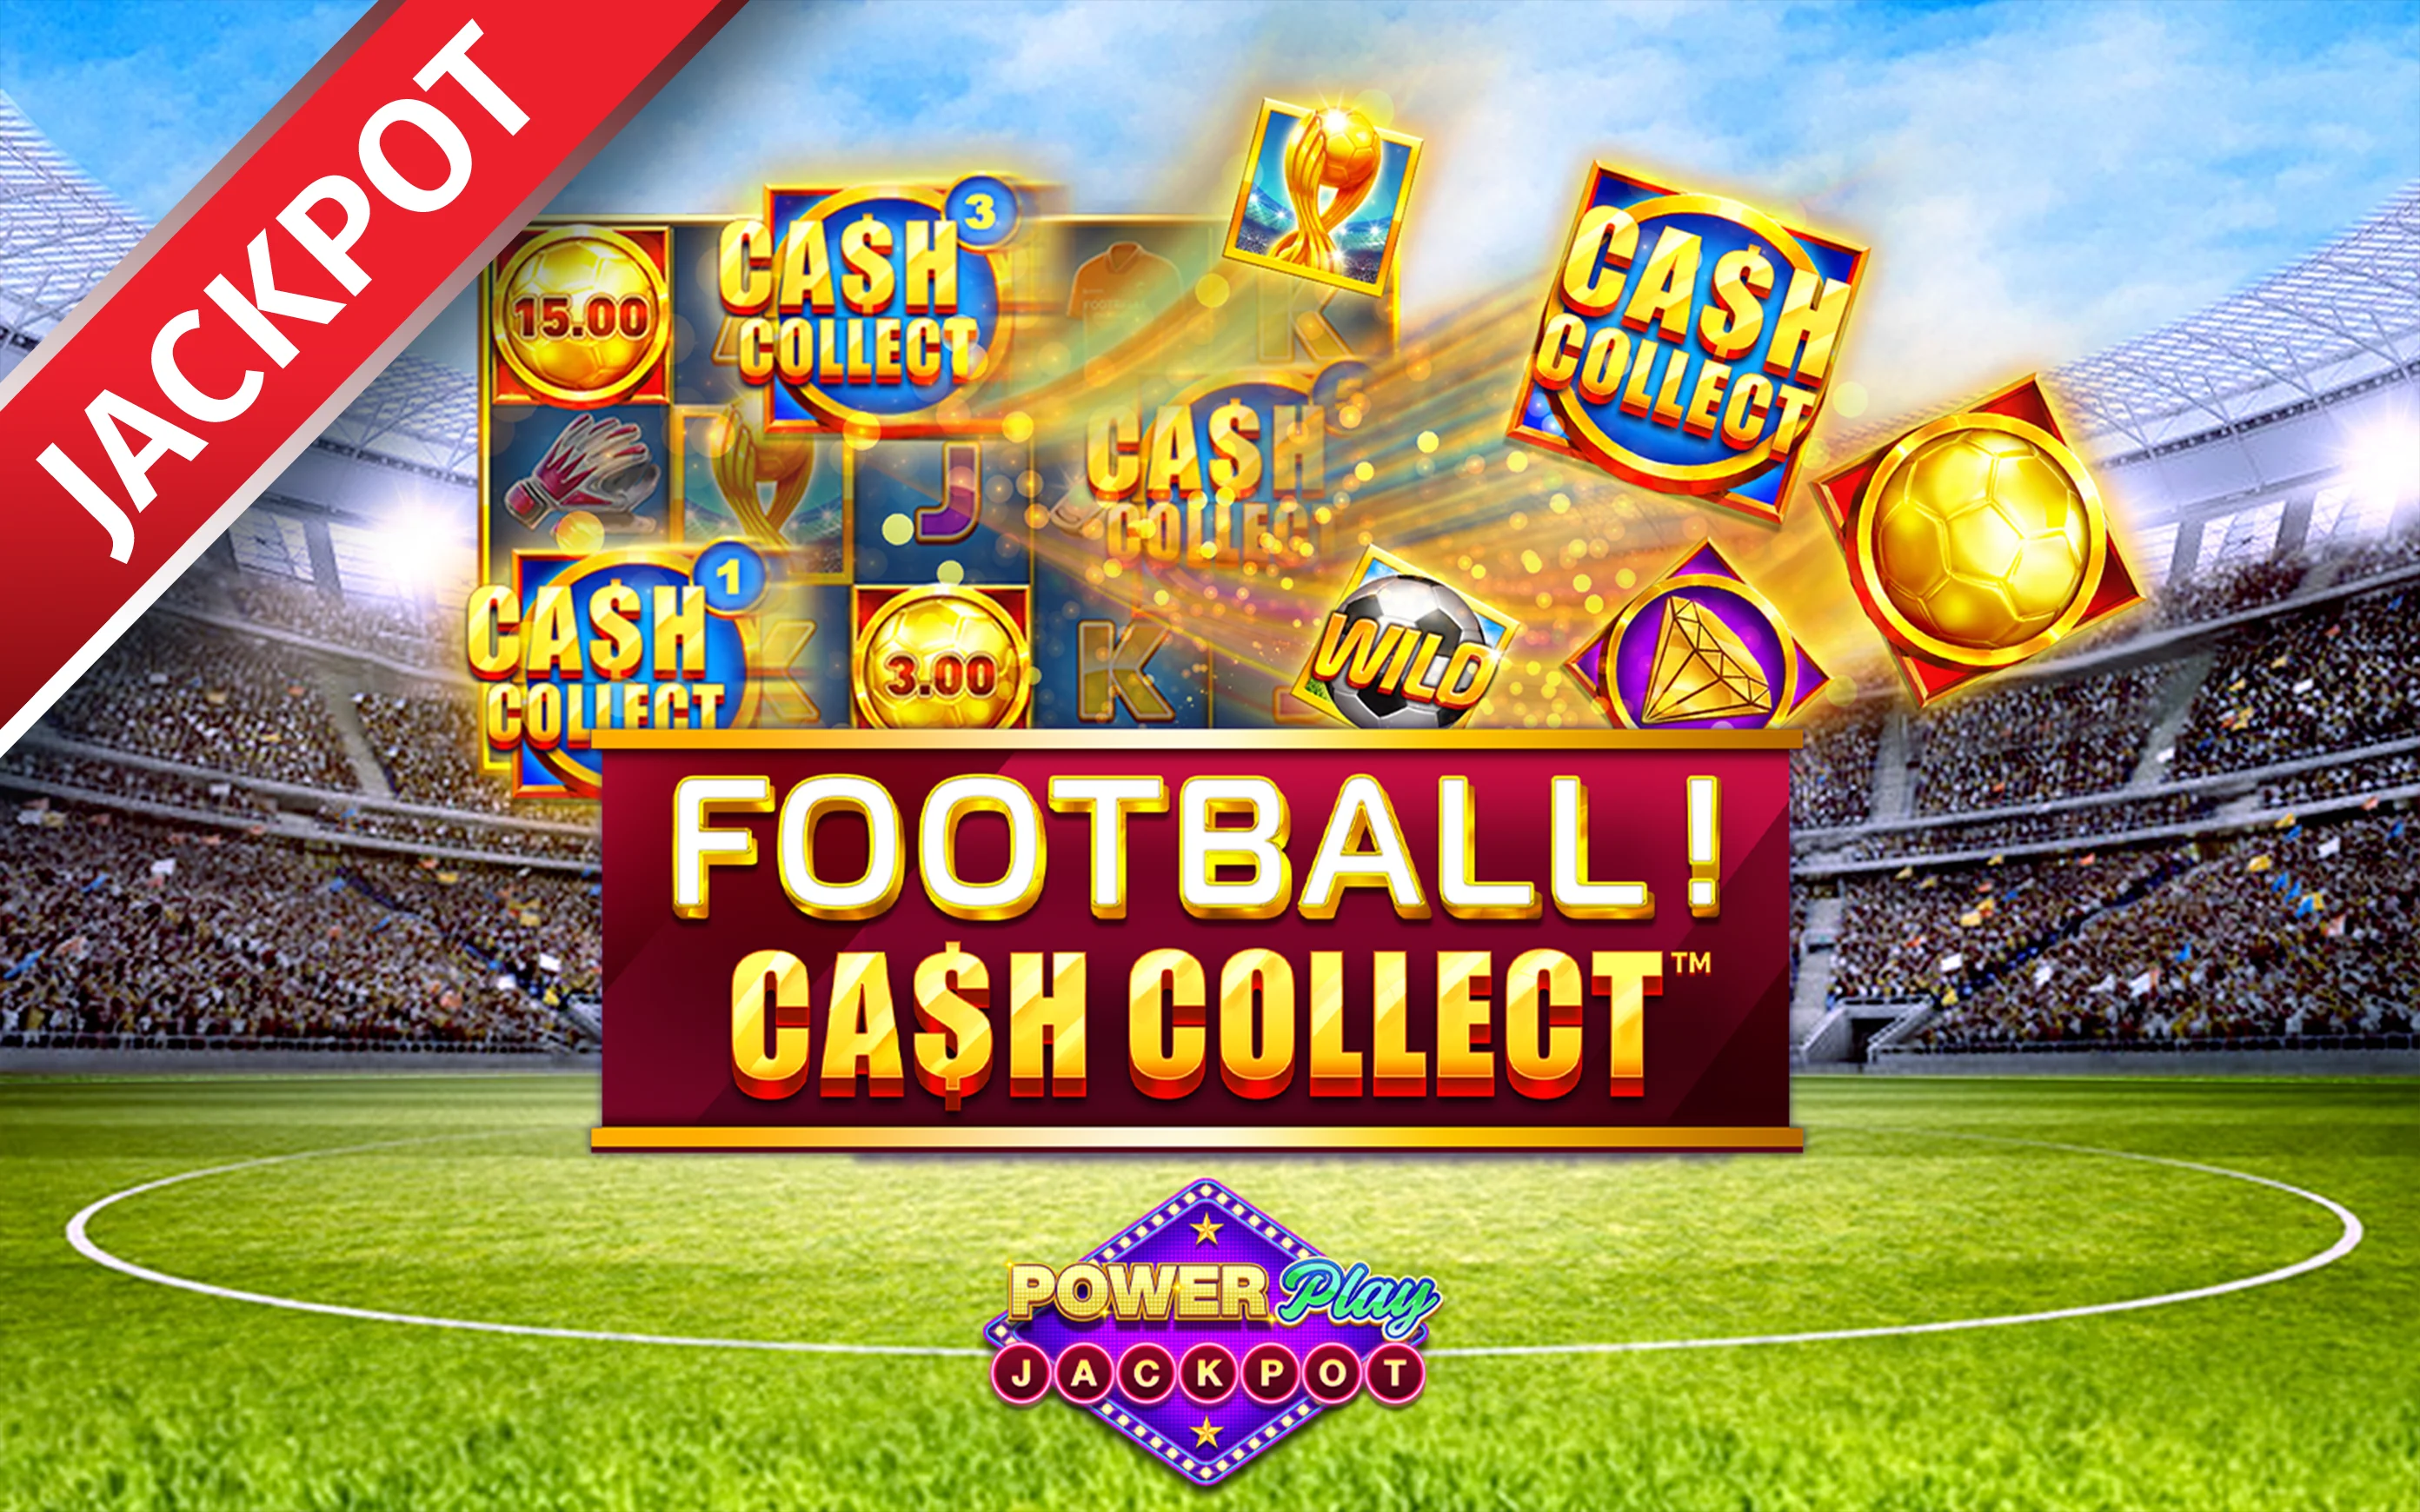 Play Football! Cash Collect™ PowerPlay Jackpot on Starcasino.be online casino